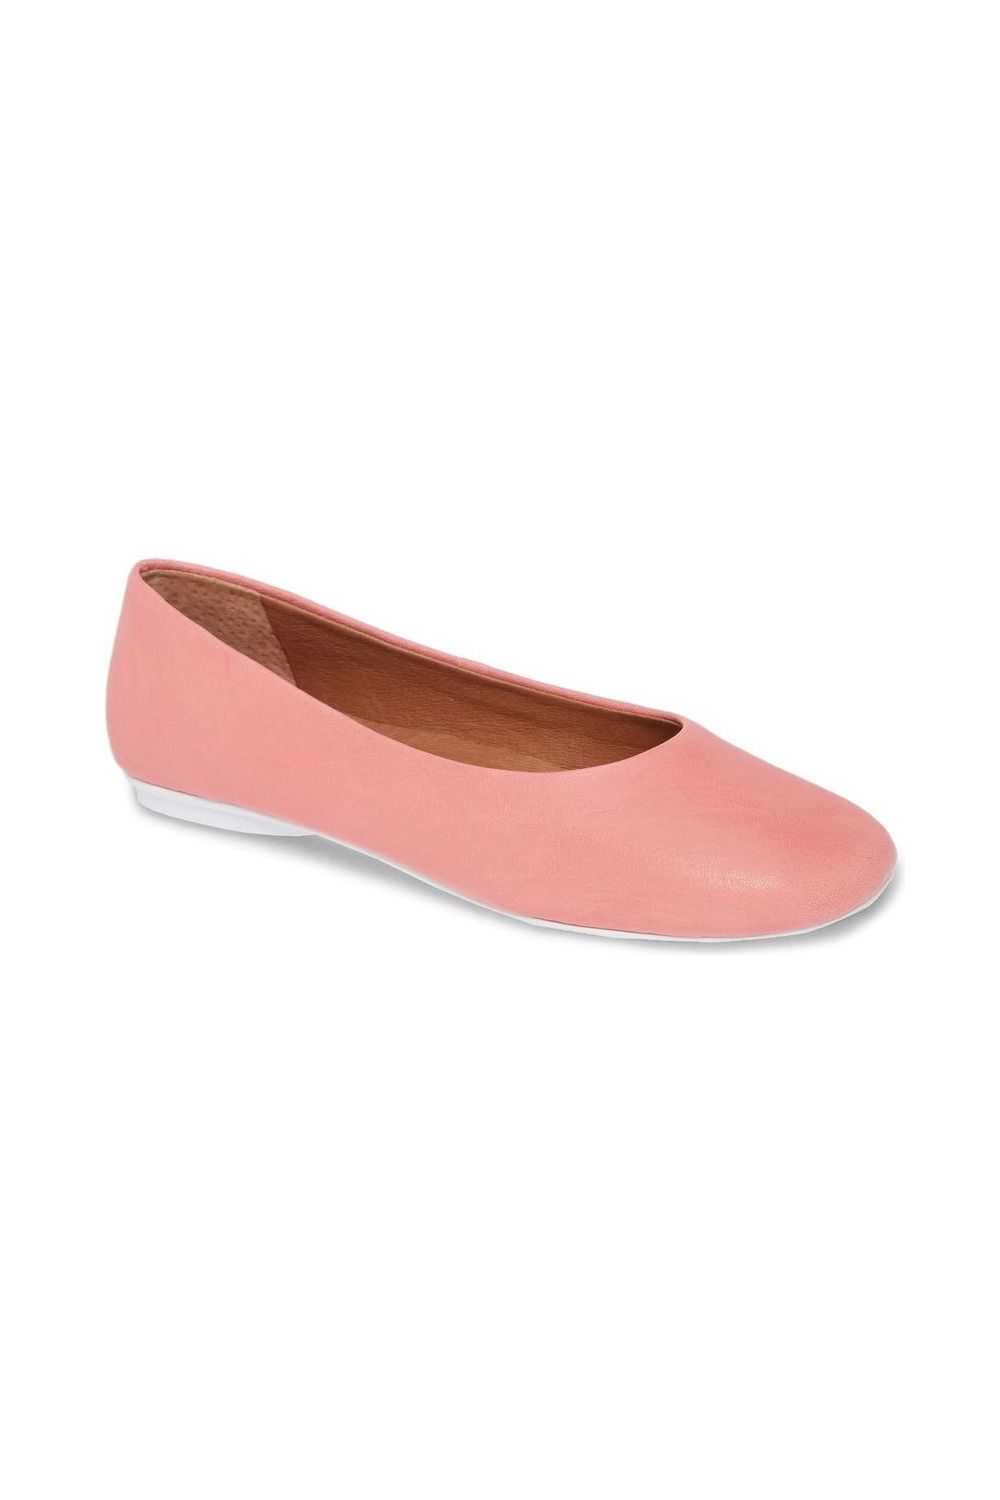 Buy > dark pink flat shoes > in stock